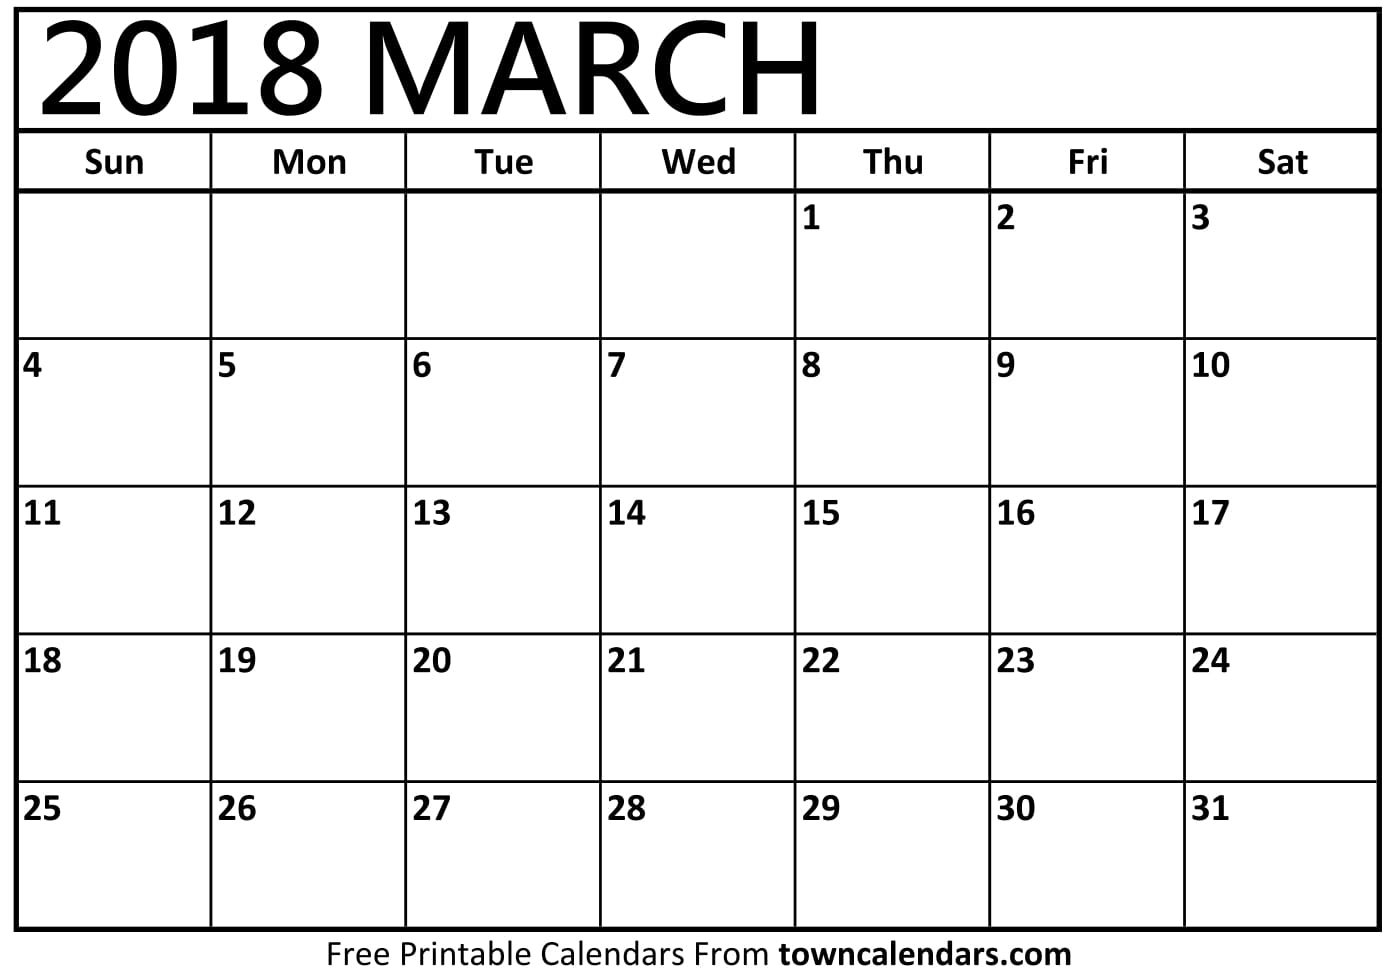 printable-march-2018-calendar-towncalendars